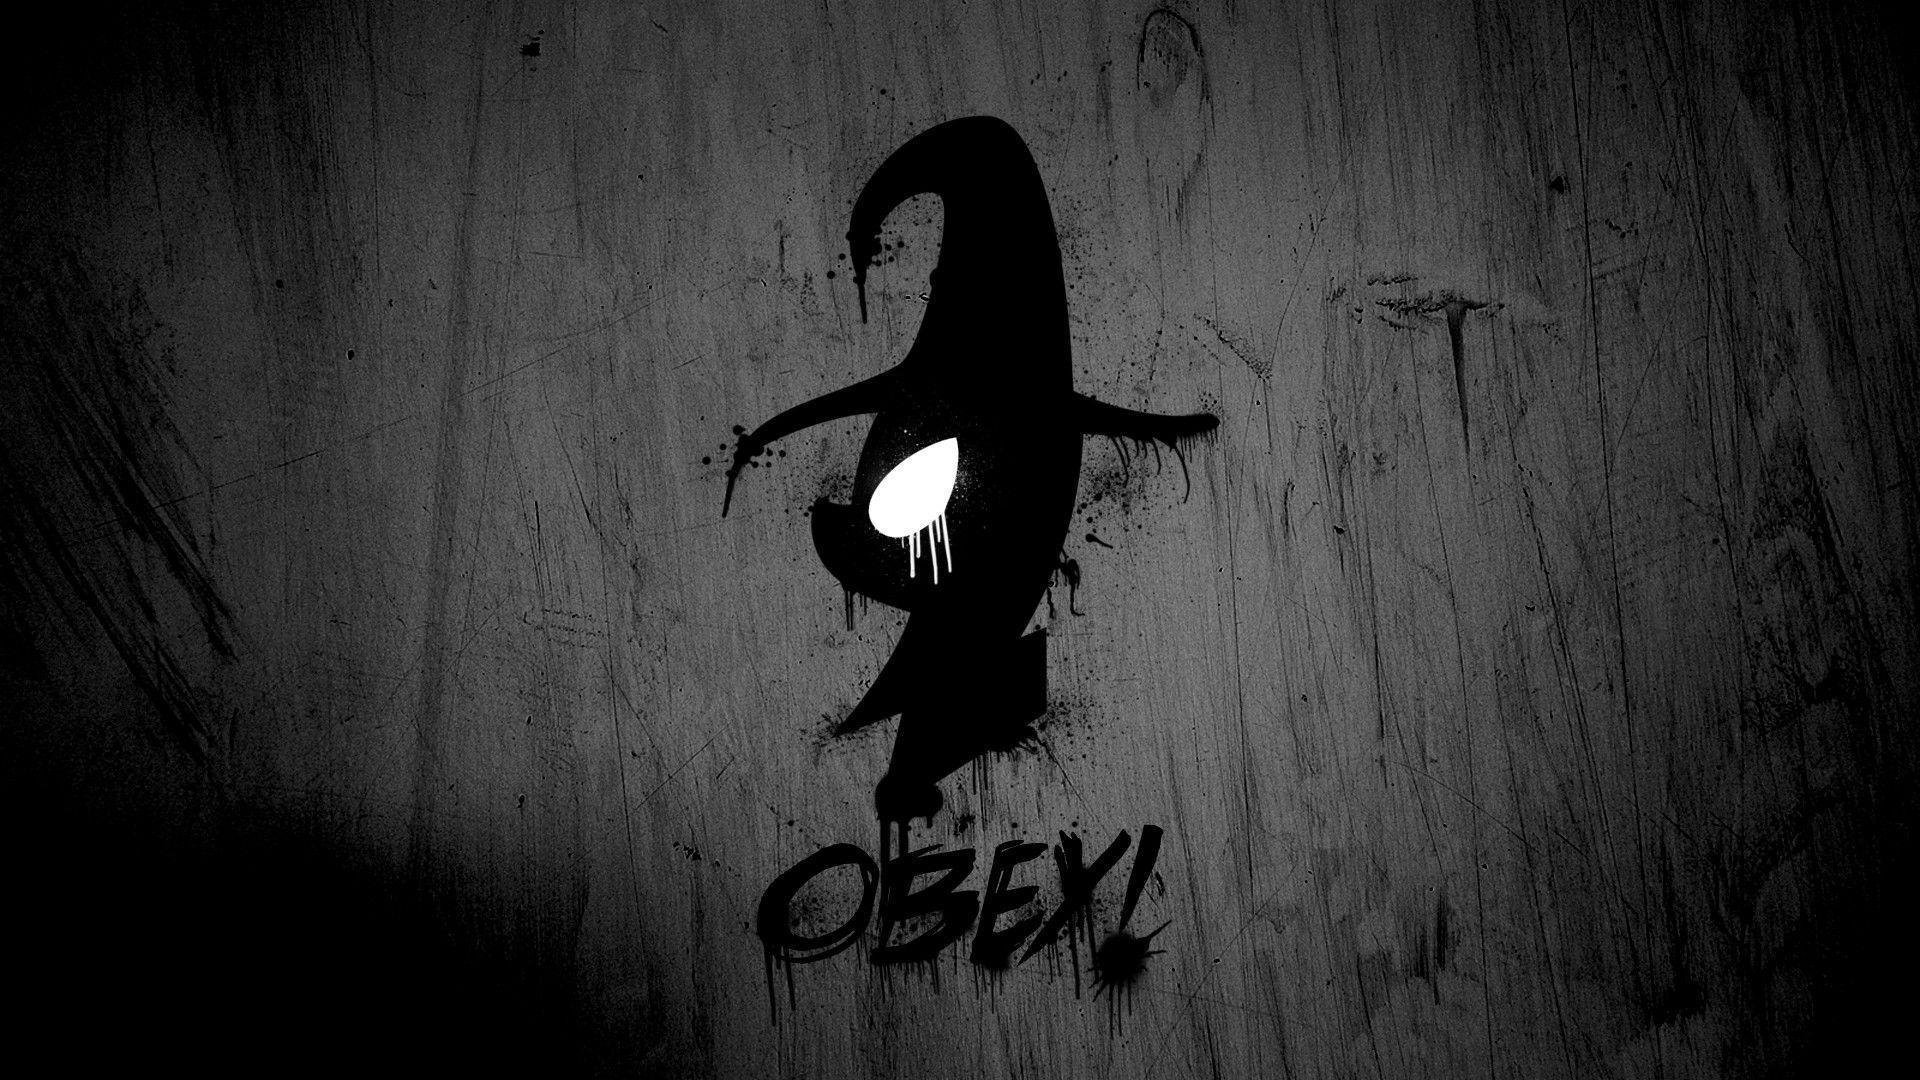 Obey wallpaper